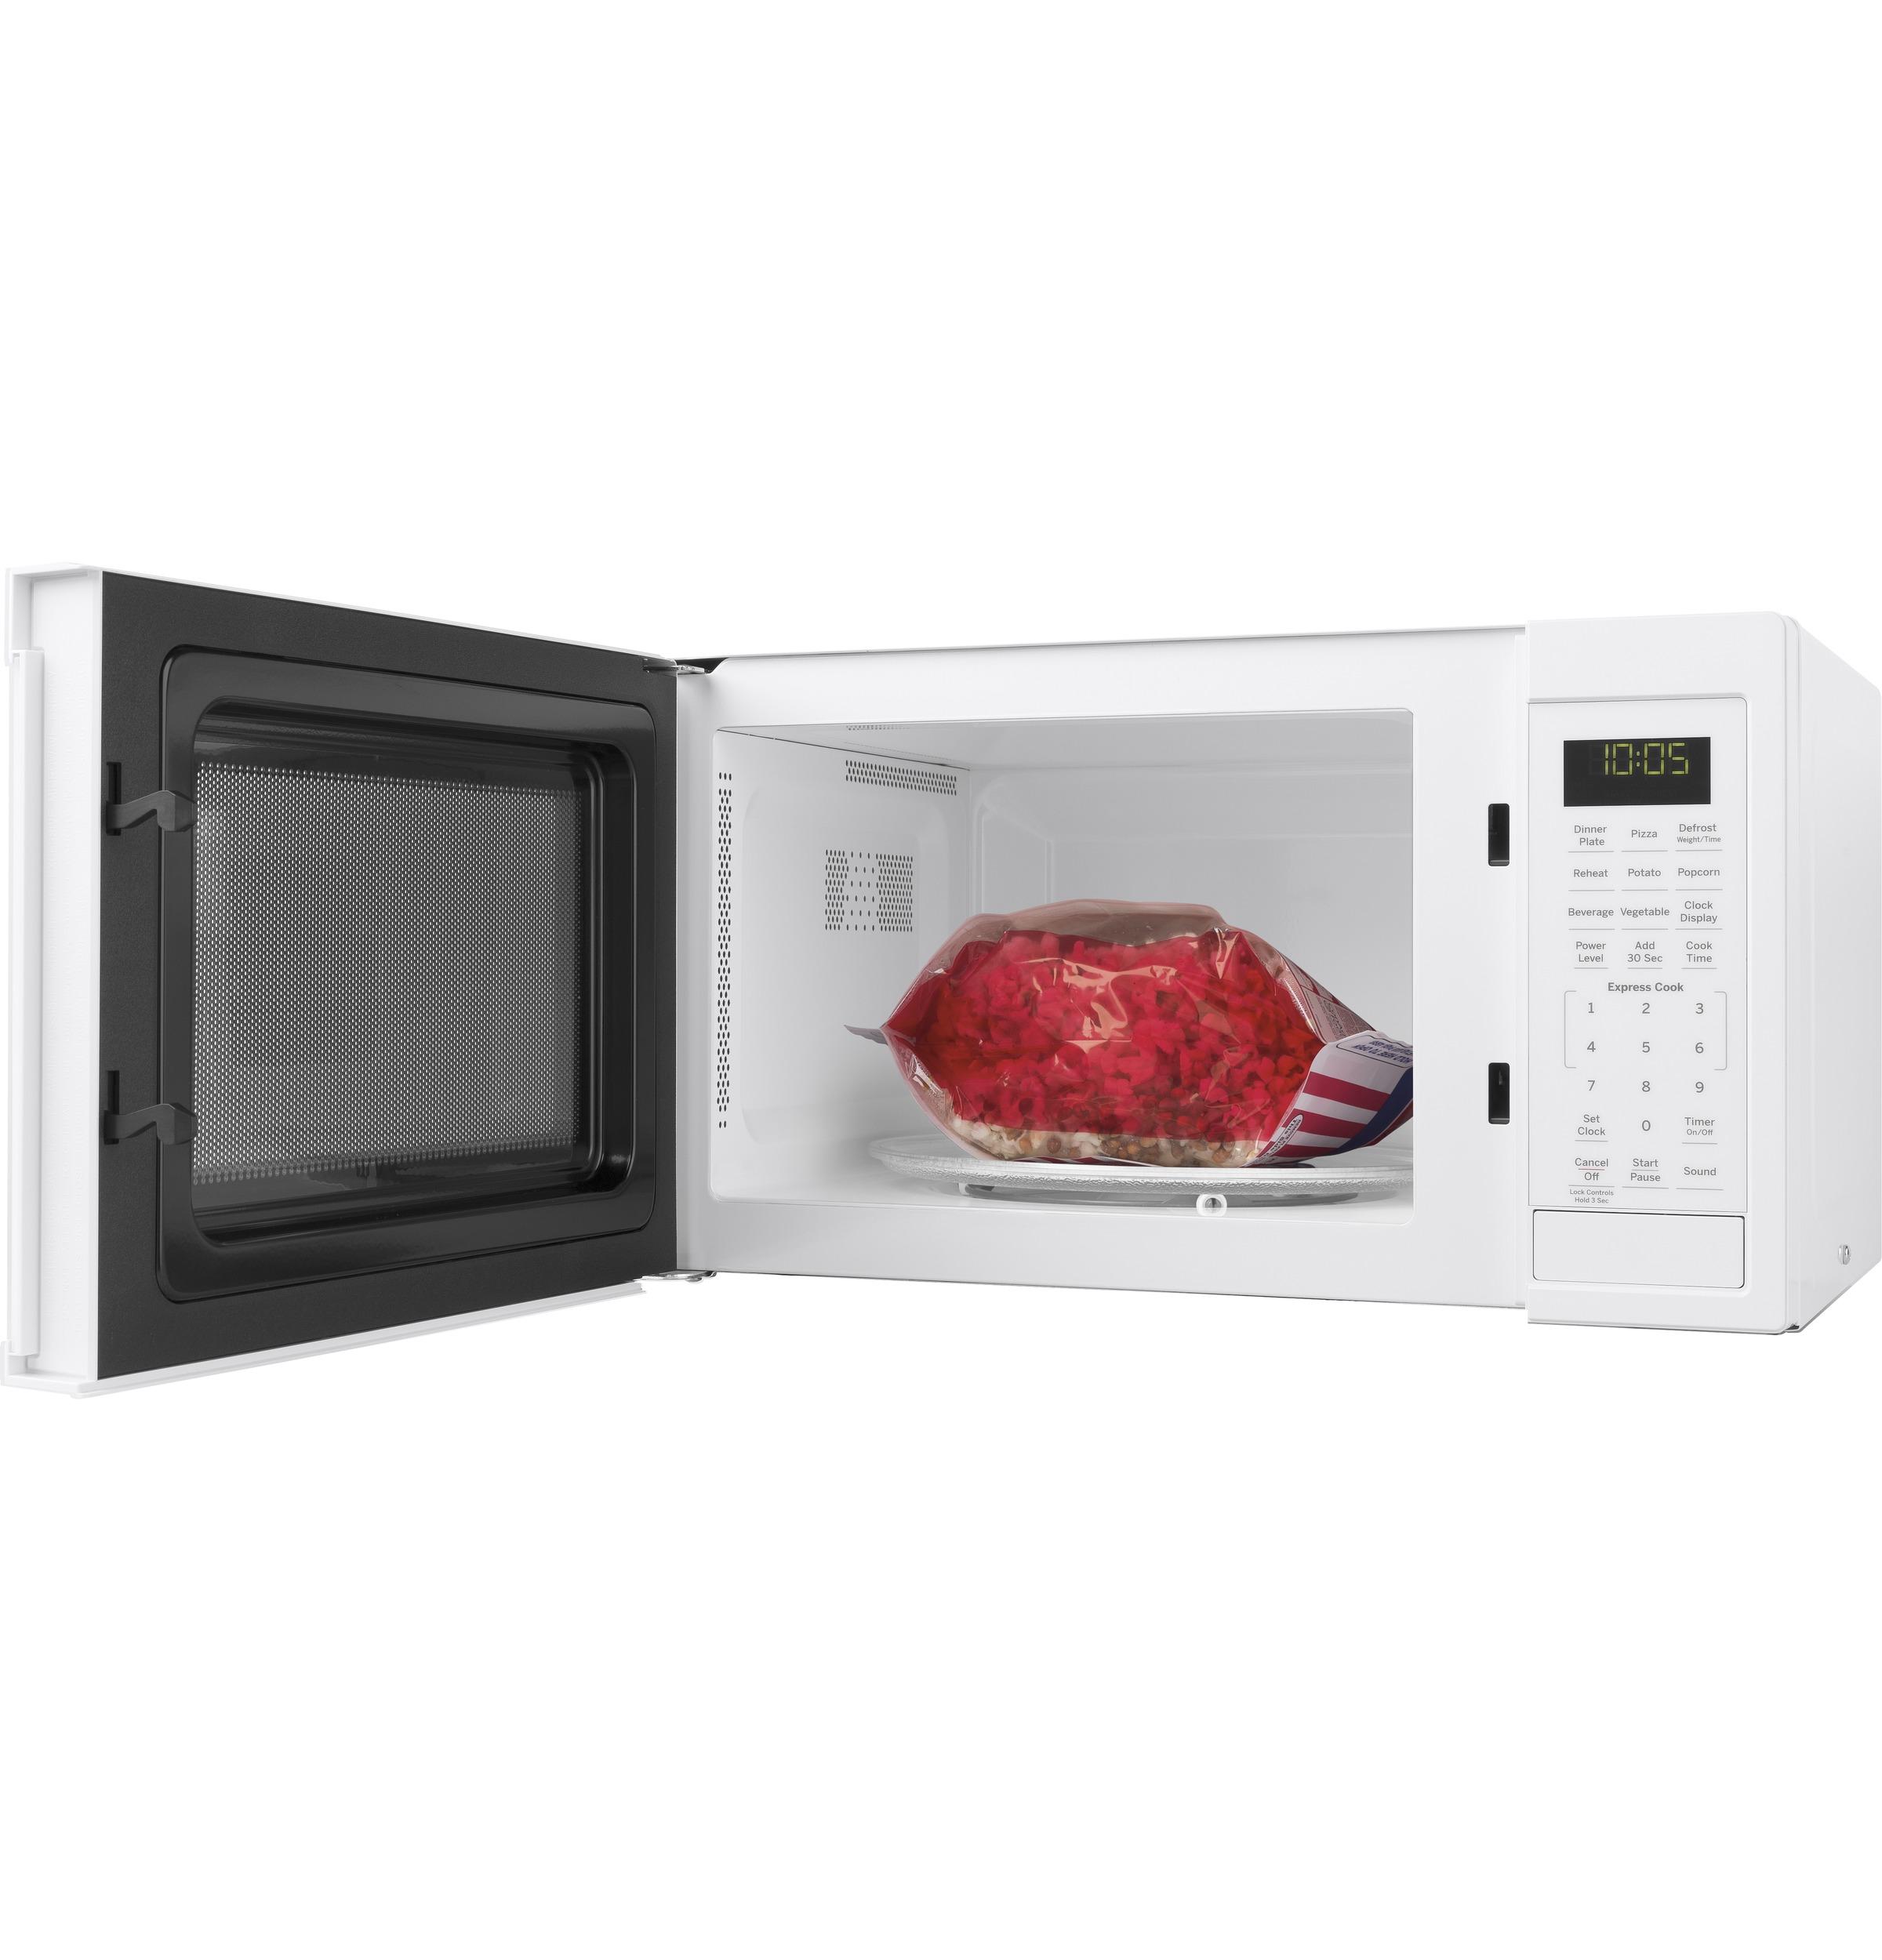 GE® 0.9 Cu. Ft. Capacity Countertop Microwave Oven